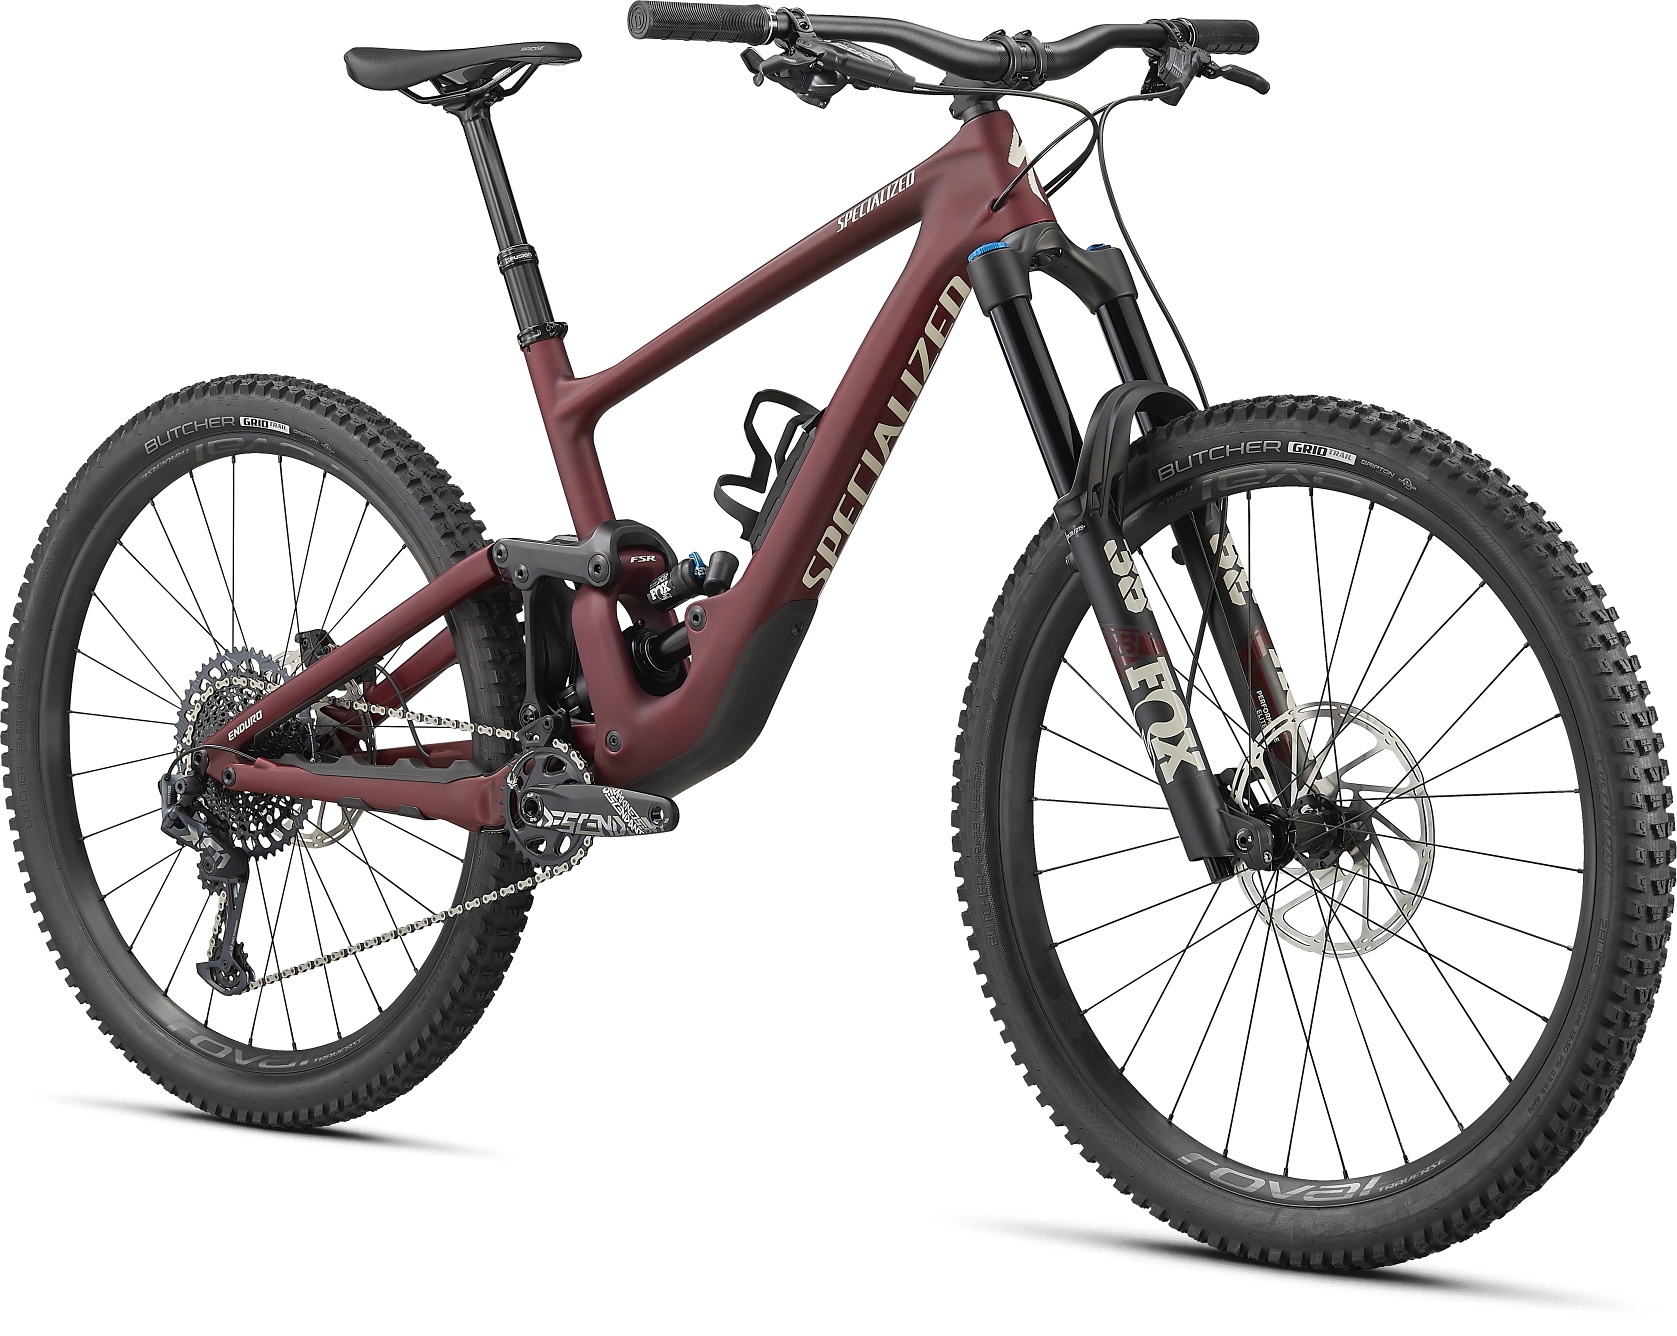 Specialized Enduro Mountain bike review 2021